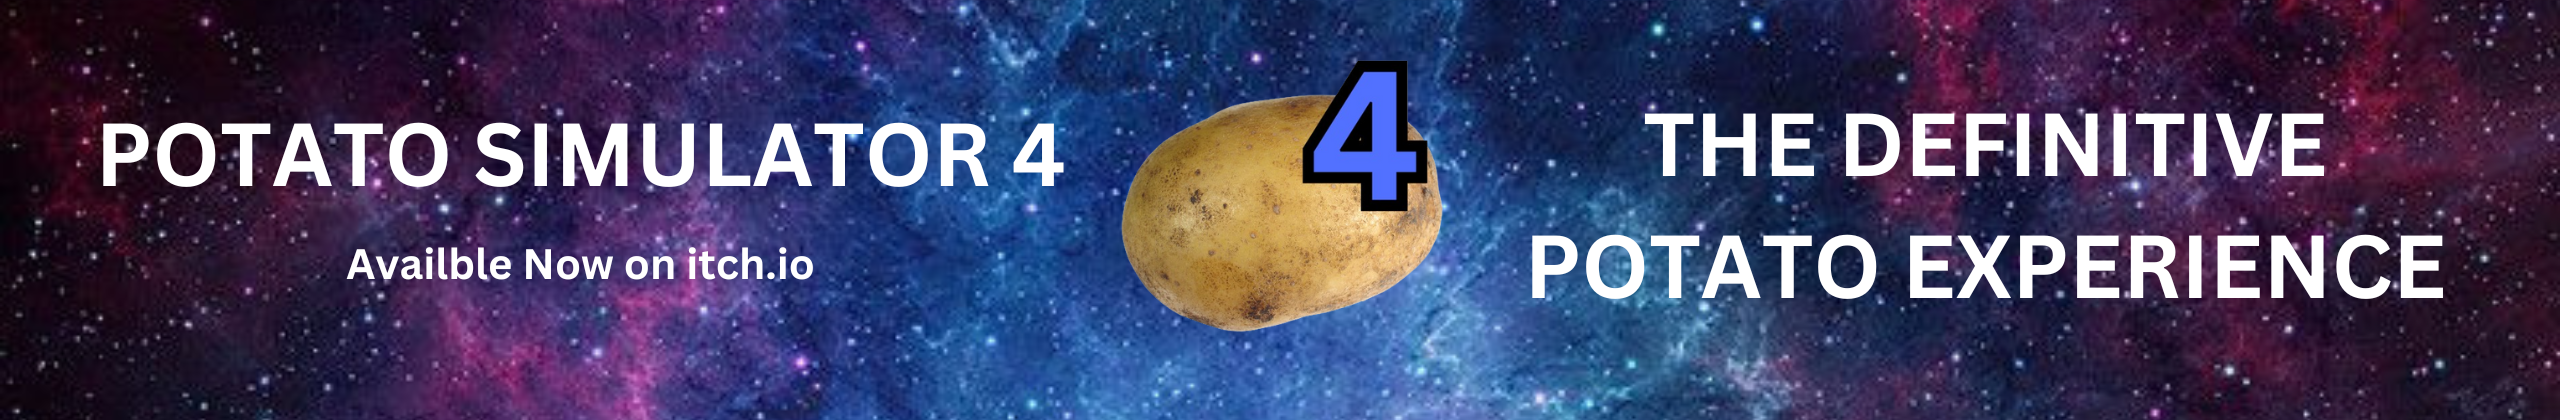 Potato Simulator 4